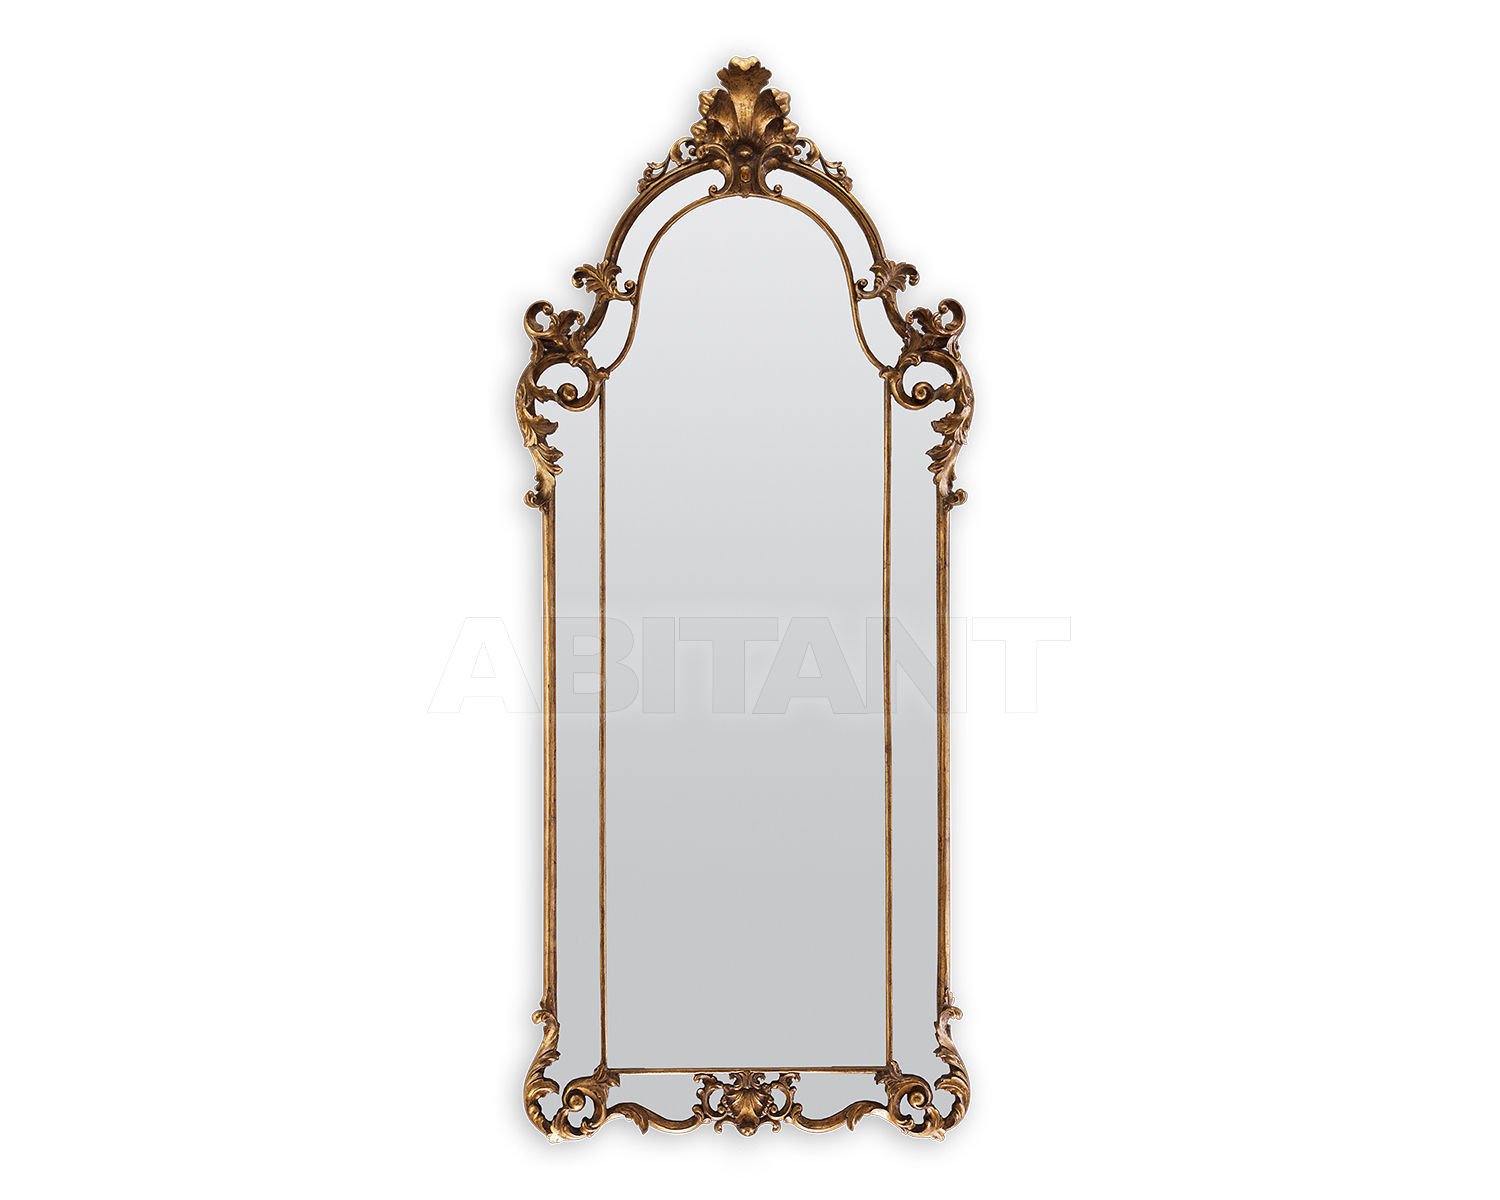 Купить Зеркало настенное Hortensia Christopher Guy 2014 50-2811-C-UBV 14th C. Gold